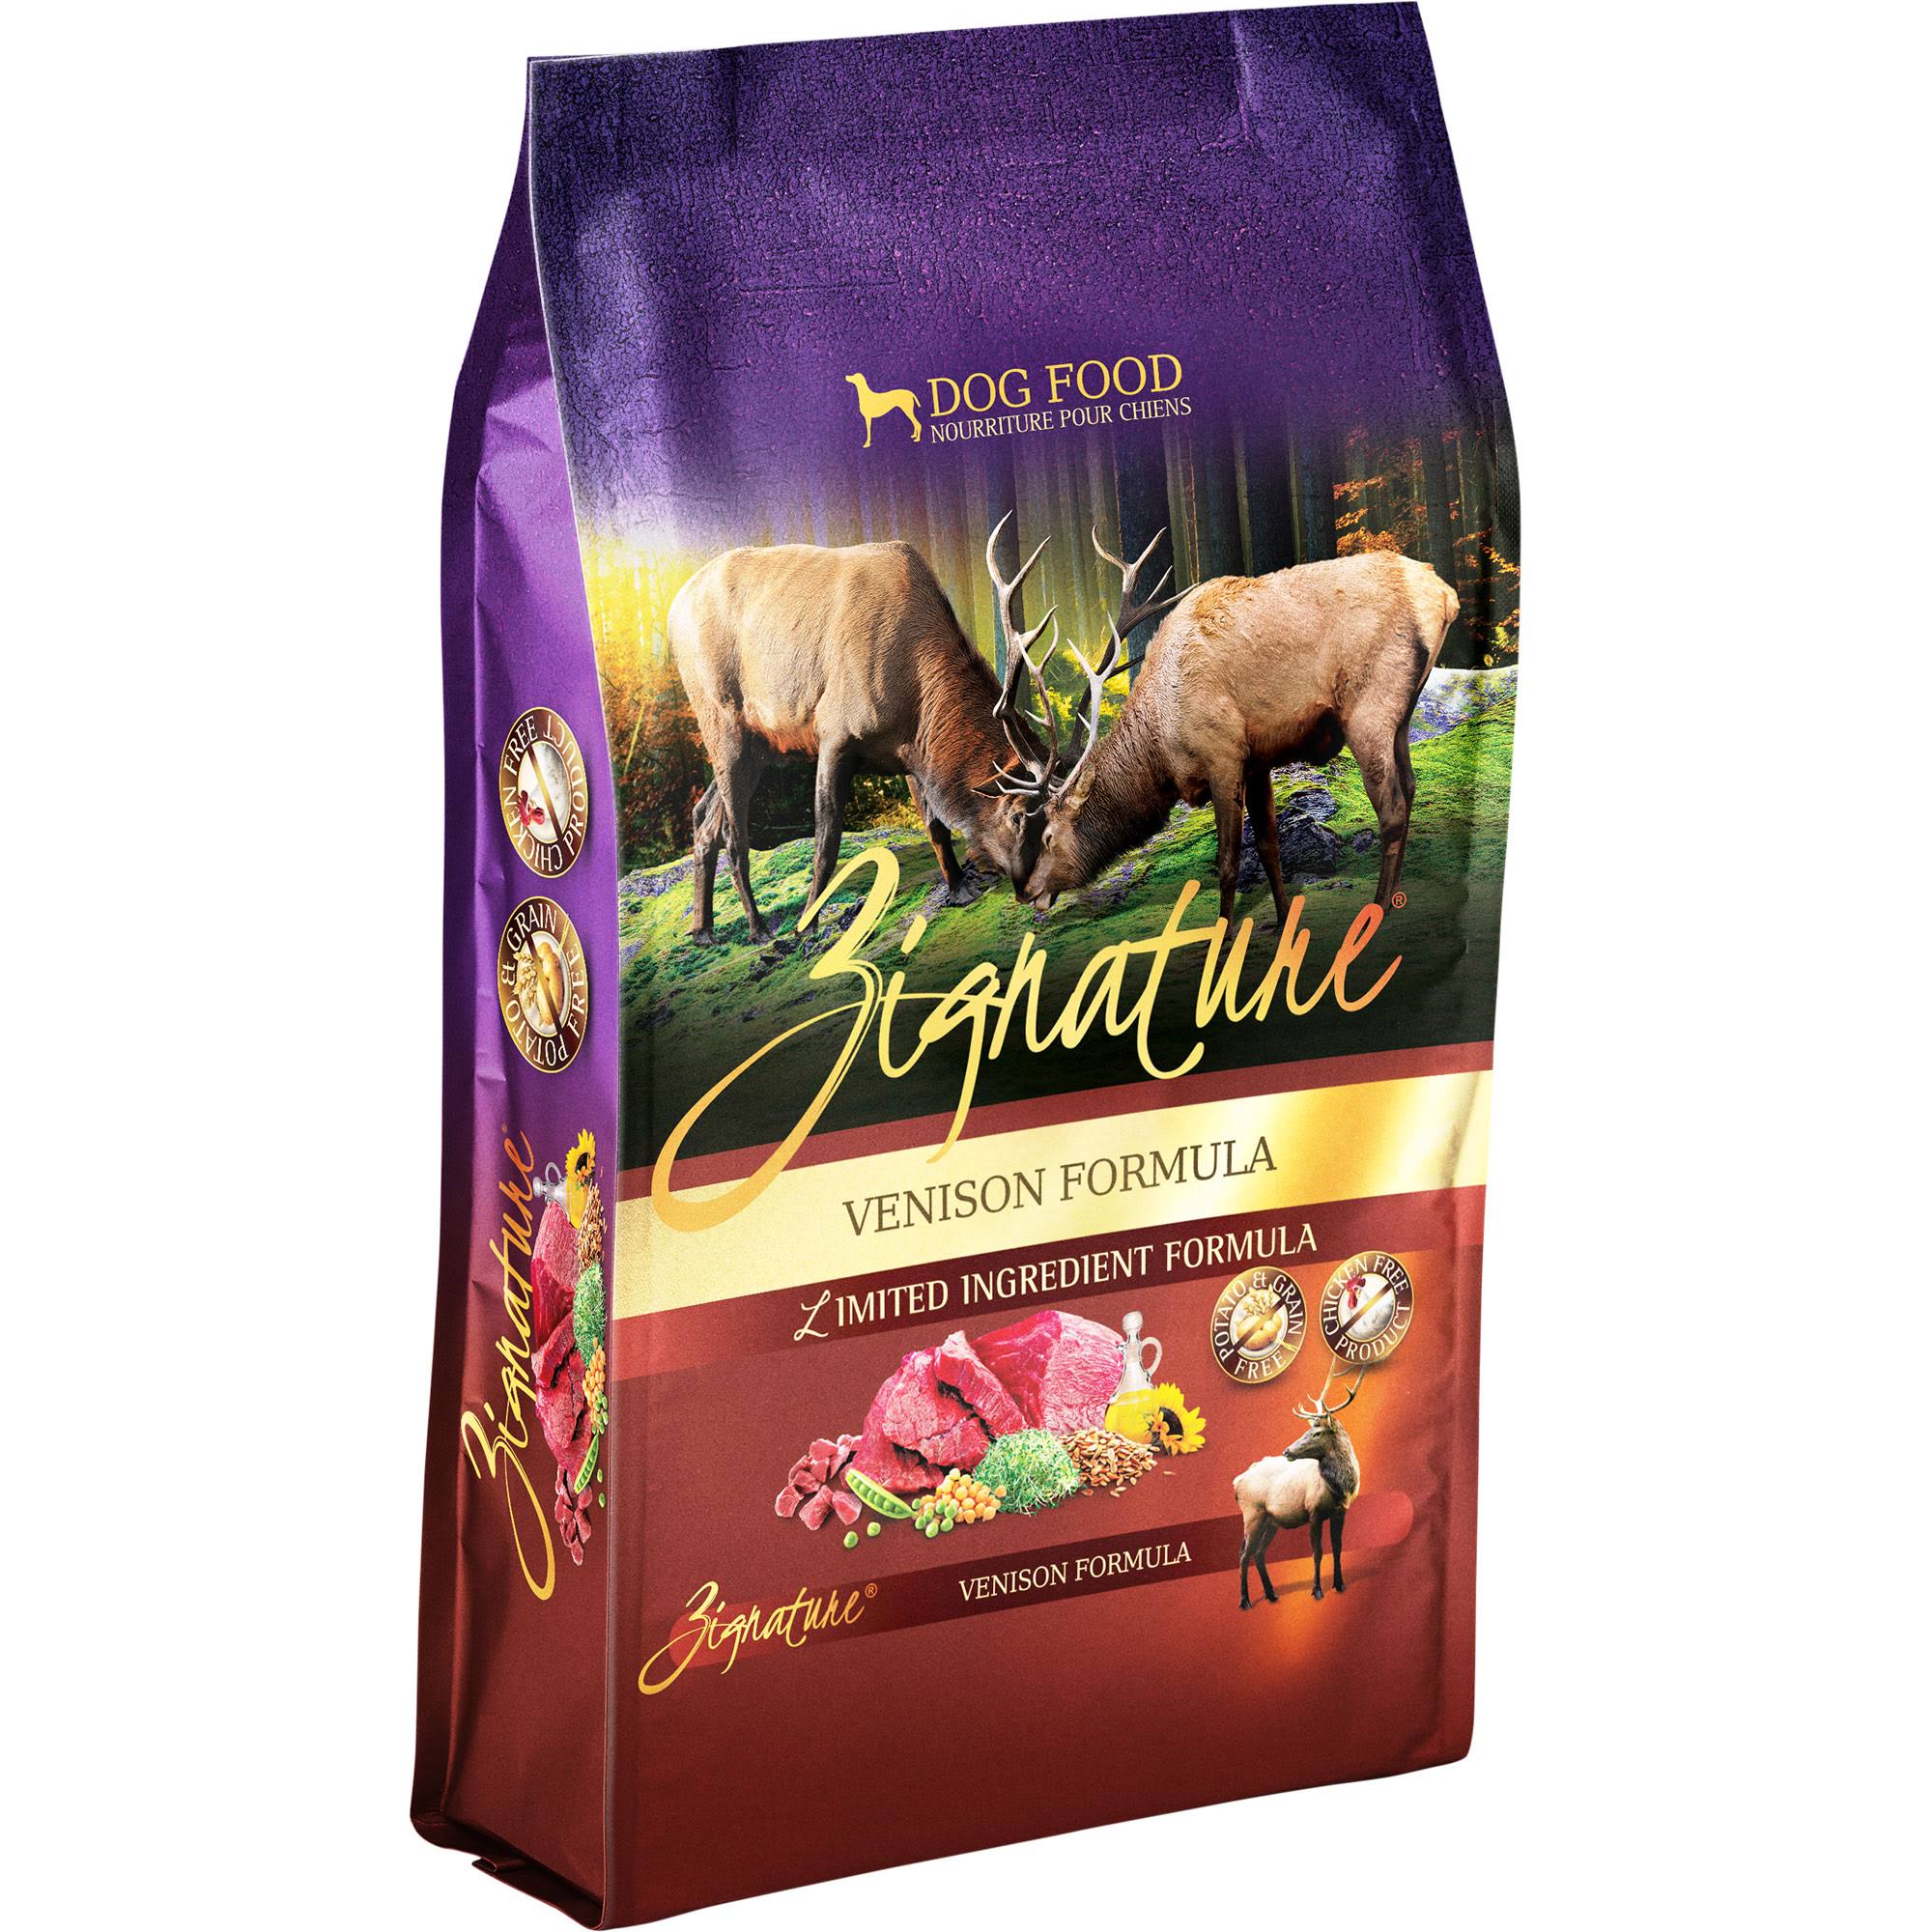 Zignature - Limited Ingredient Grain Free Venison Dog Food 4lb